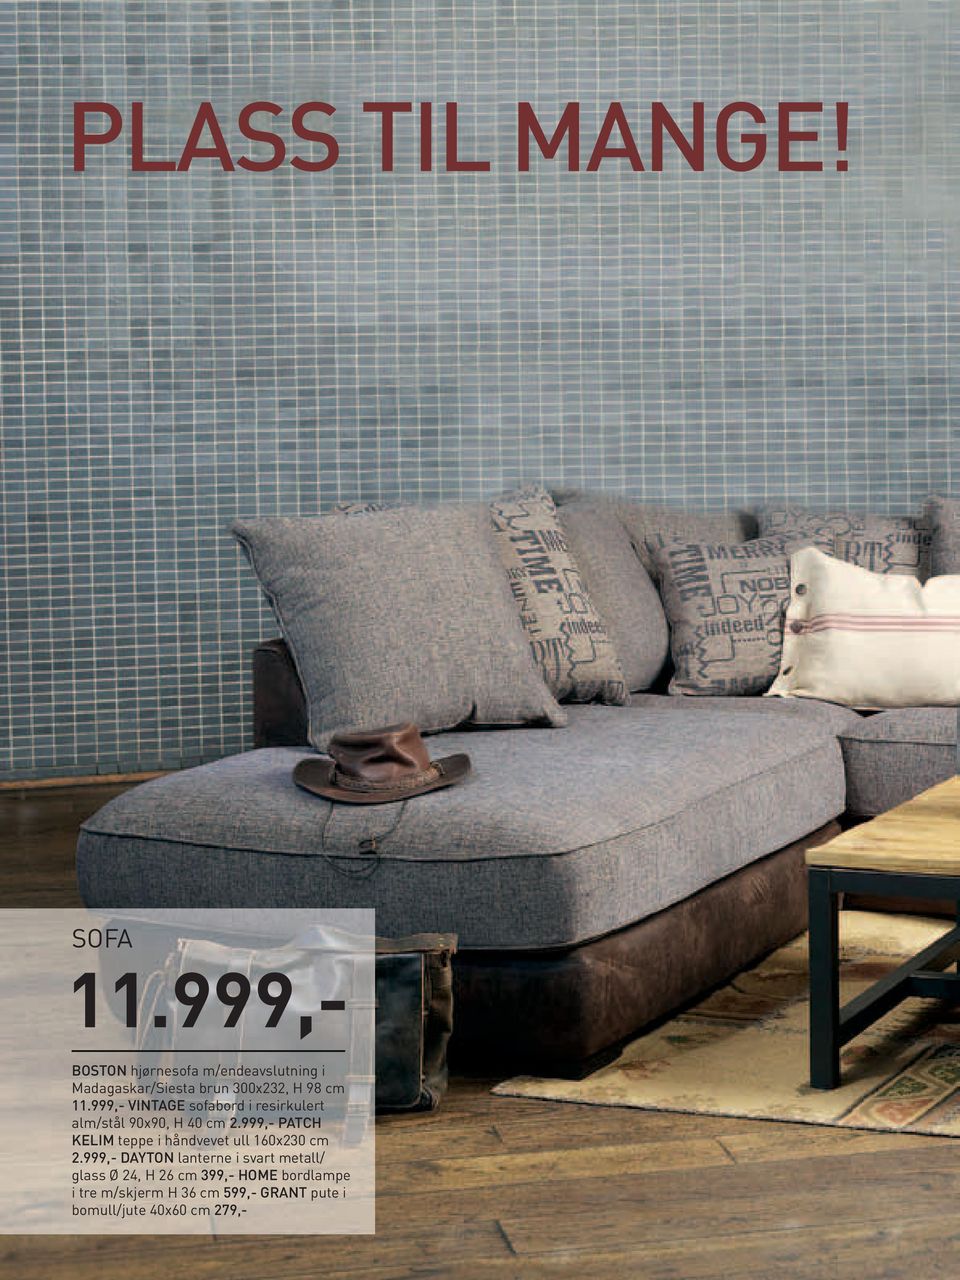 999,- VINTAgE sofabord i resirkulert alm/stål 90x90, H 40 cm 2.